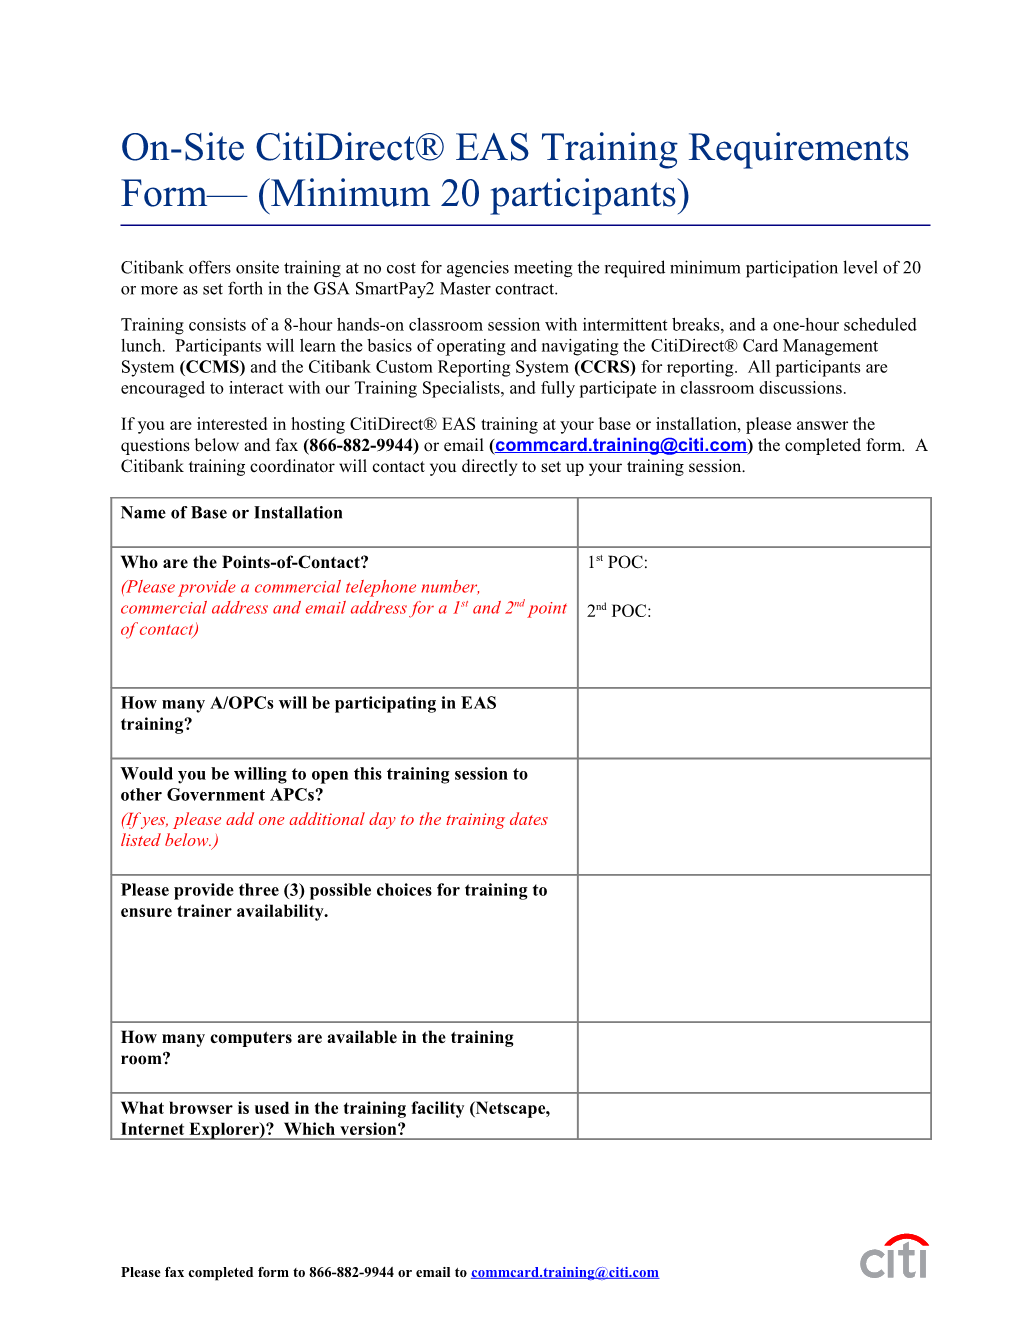 On-Site Citidirect EAS Training Requirements Form (Minimum 20 Participants)